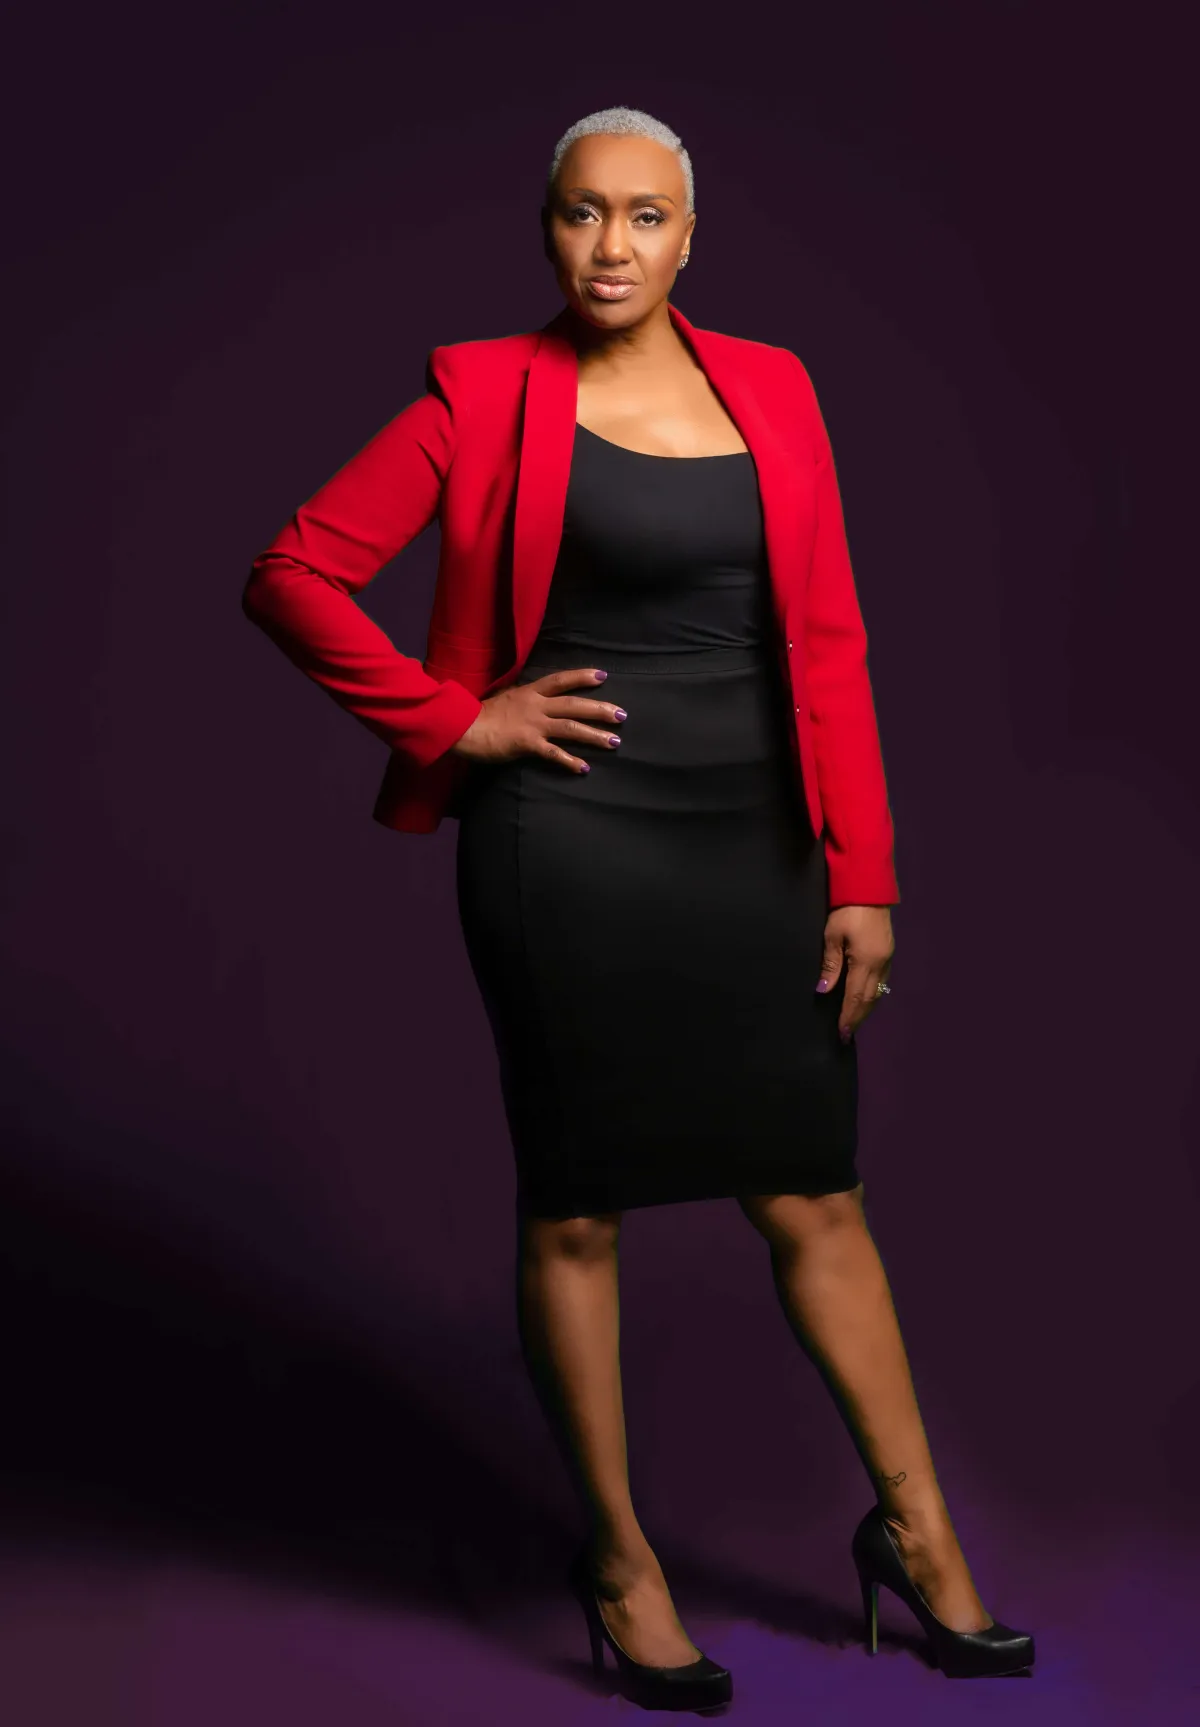 black woman in red suit in sterling virginia photoshoot